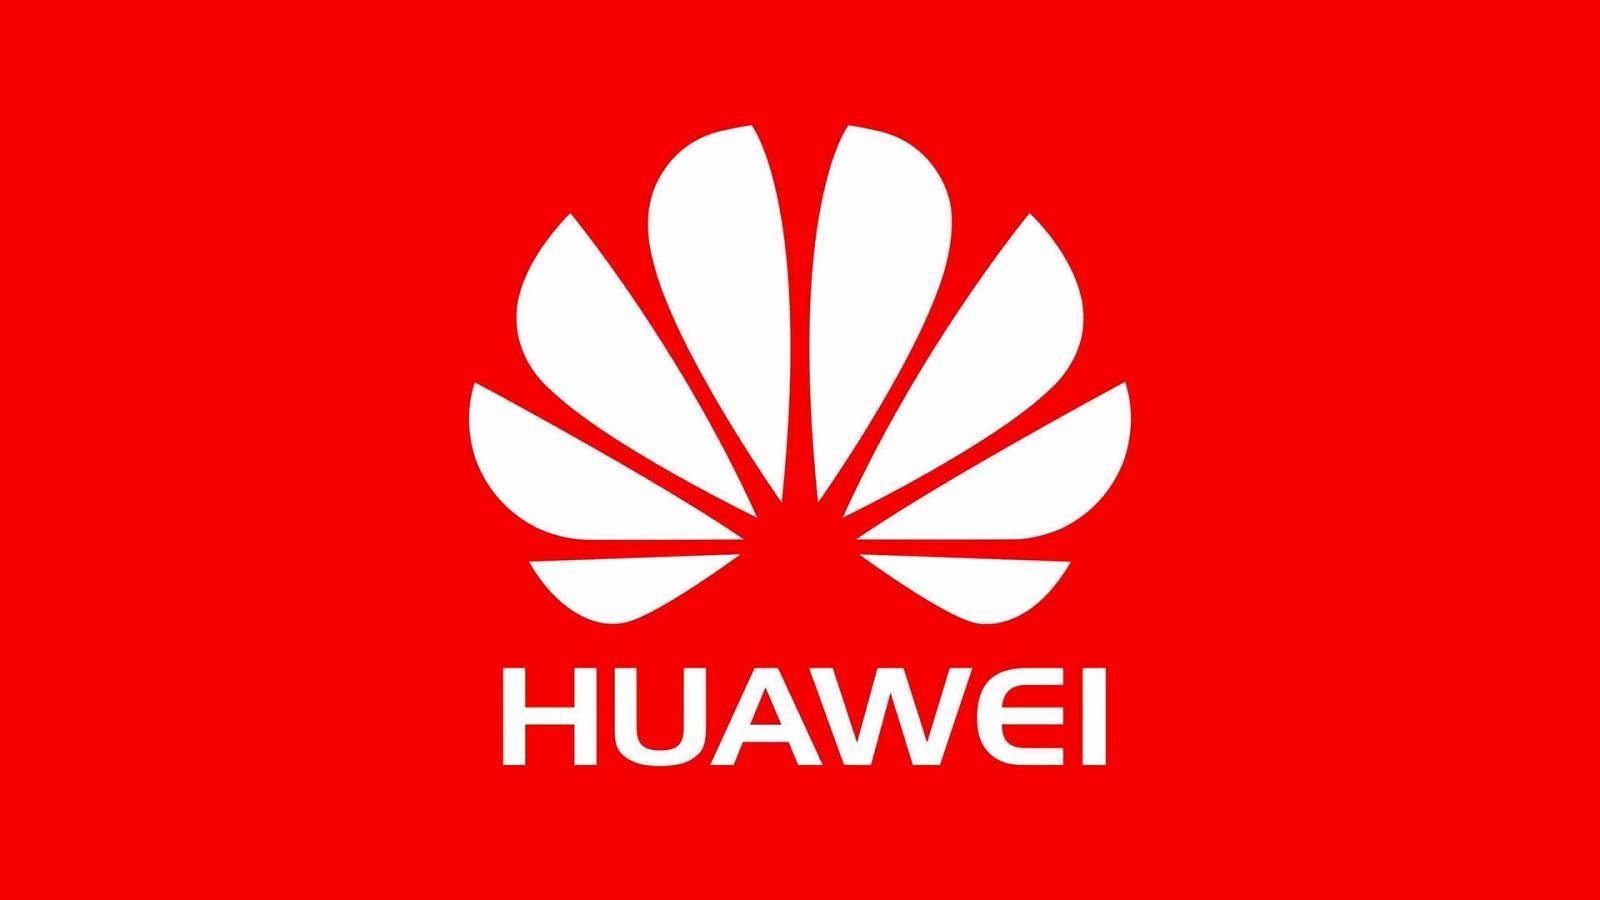 Huawei holografic